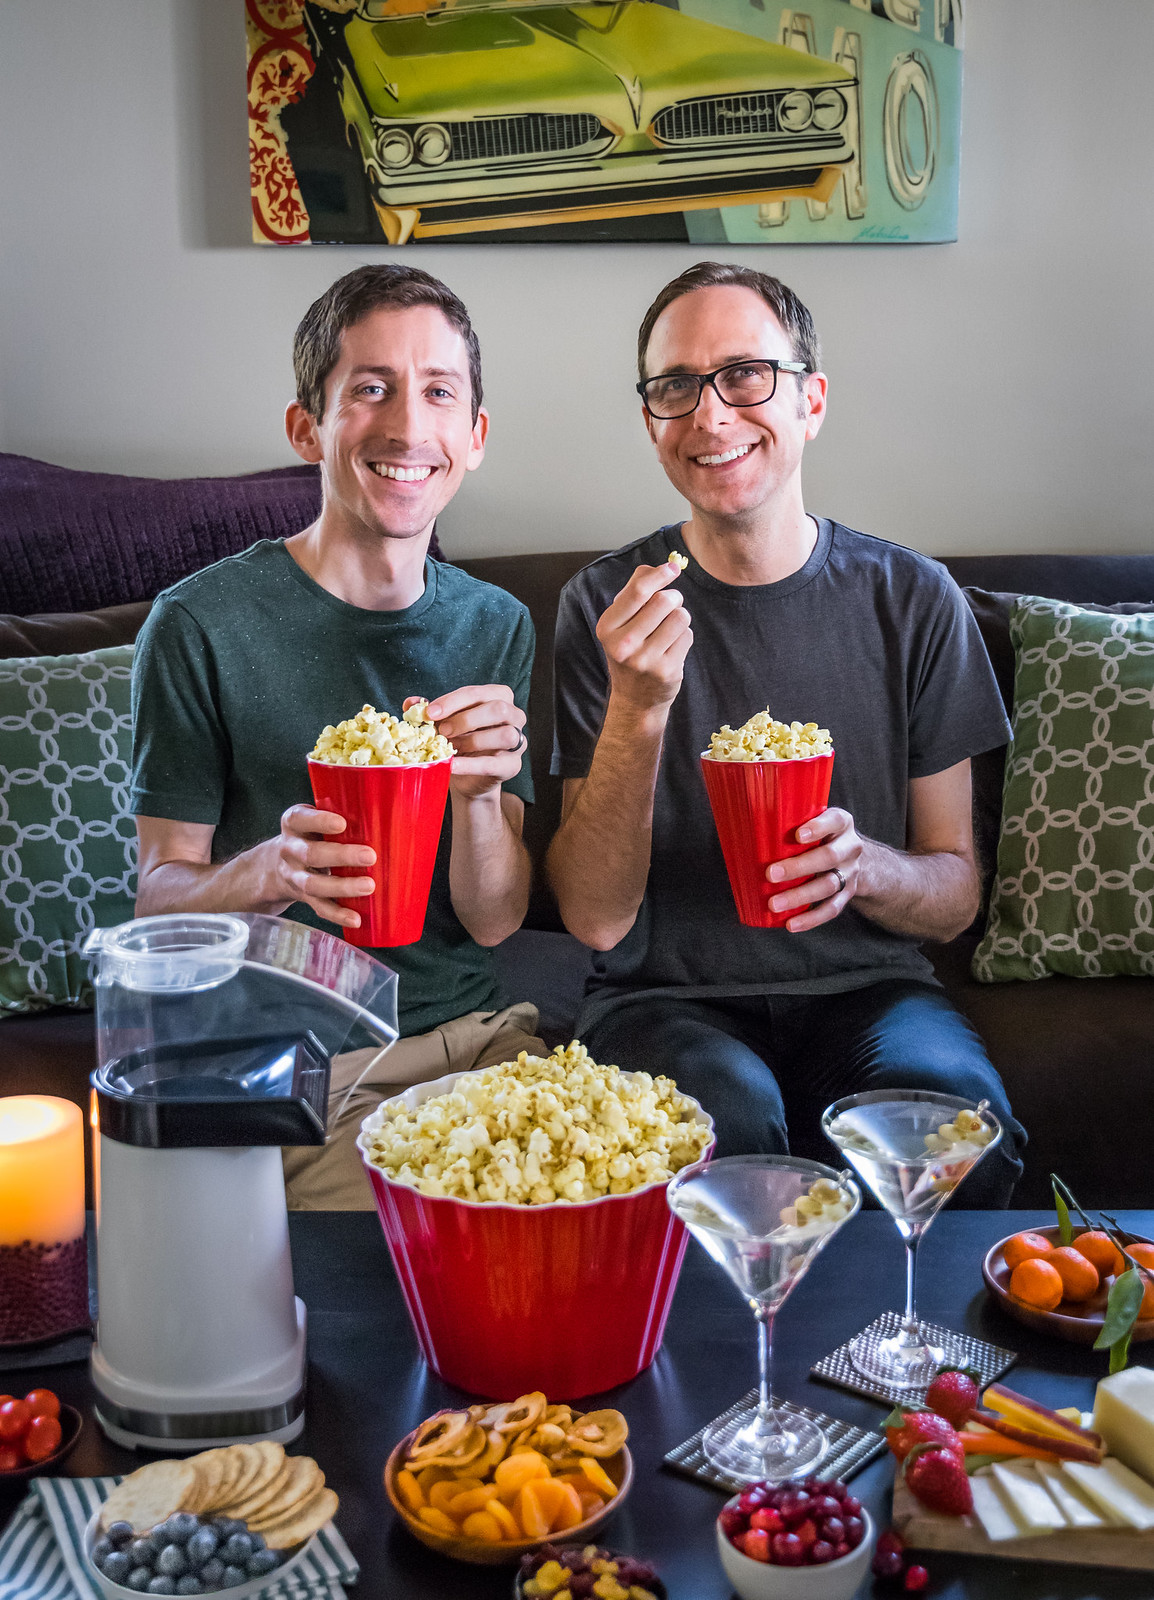 happy national popcorn day!